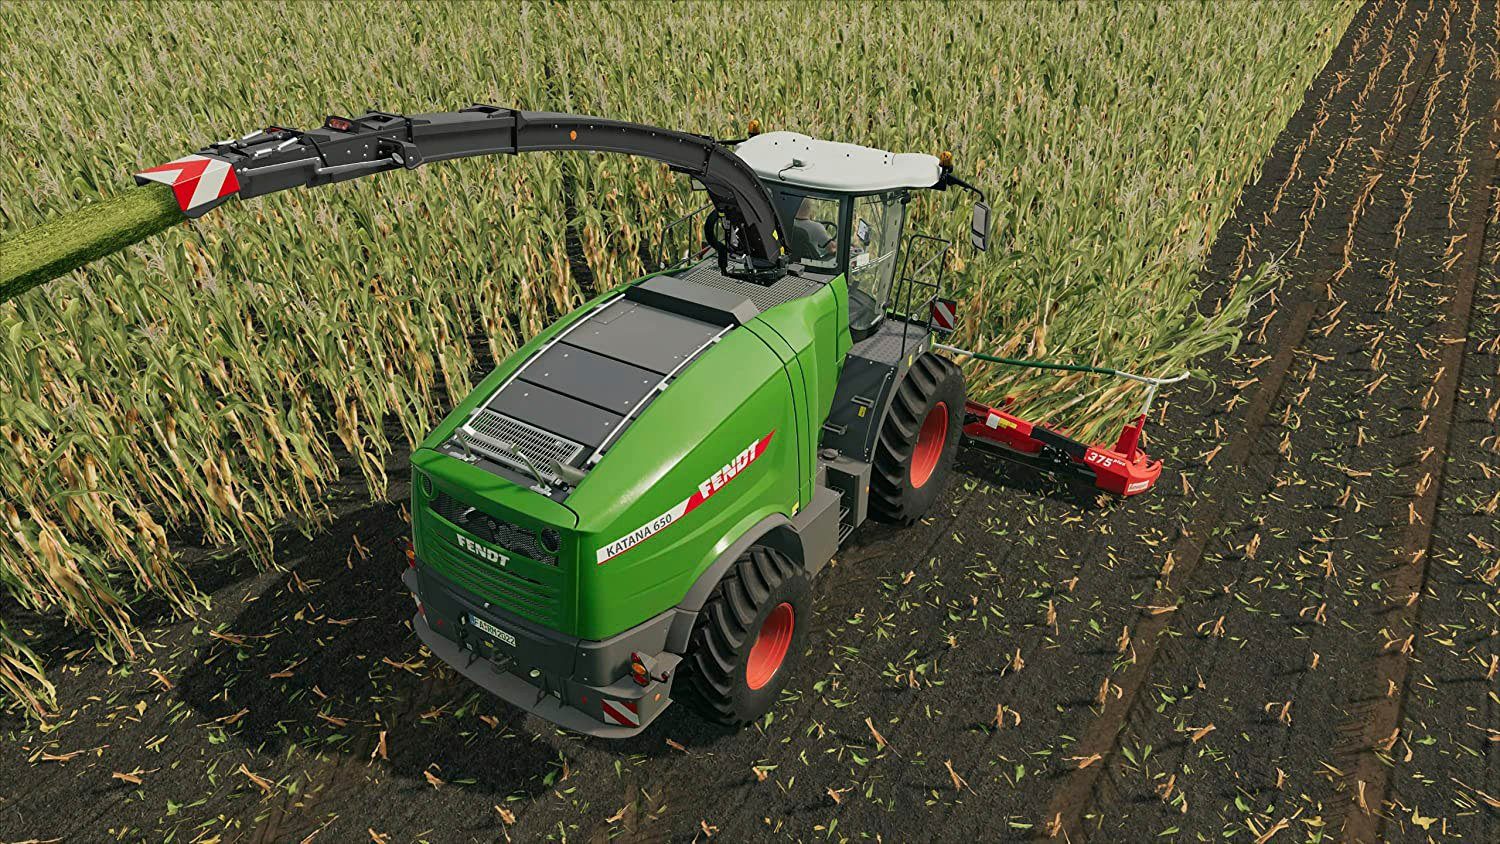 Astragon Landwirtschafts-Simulator 22 PlayStation 5